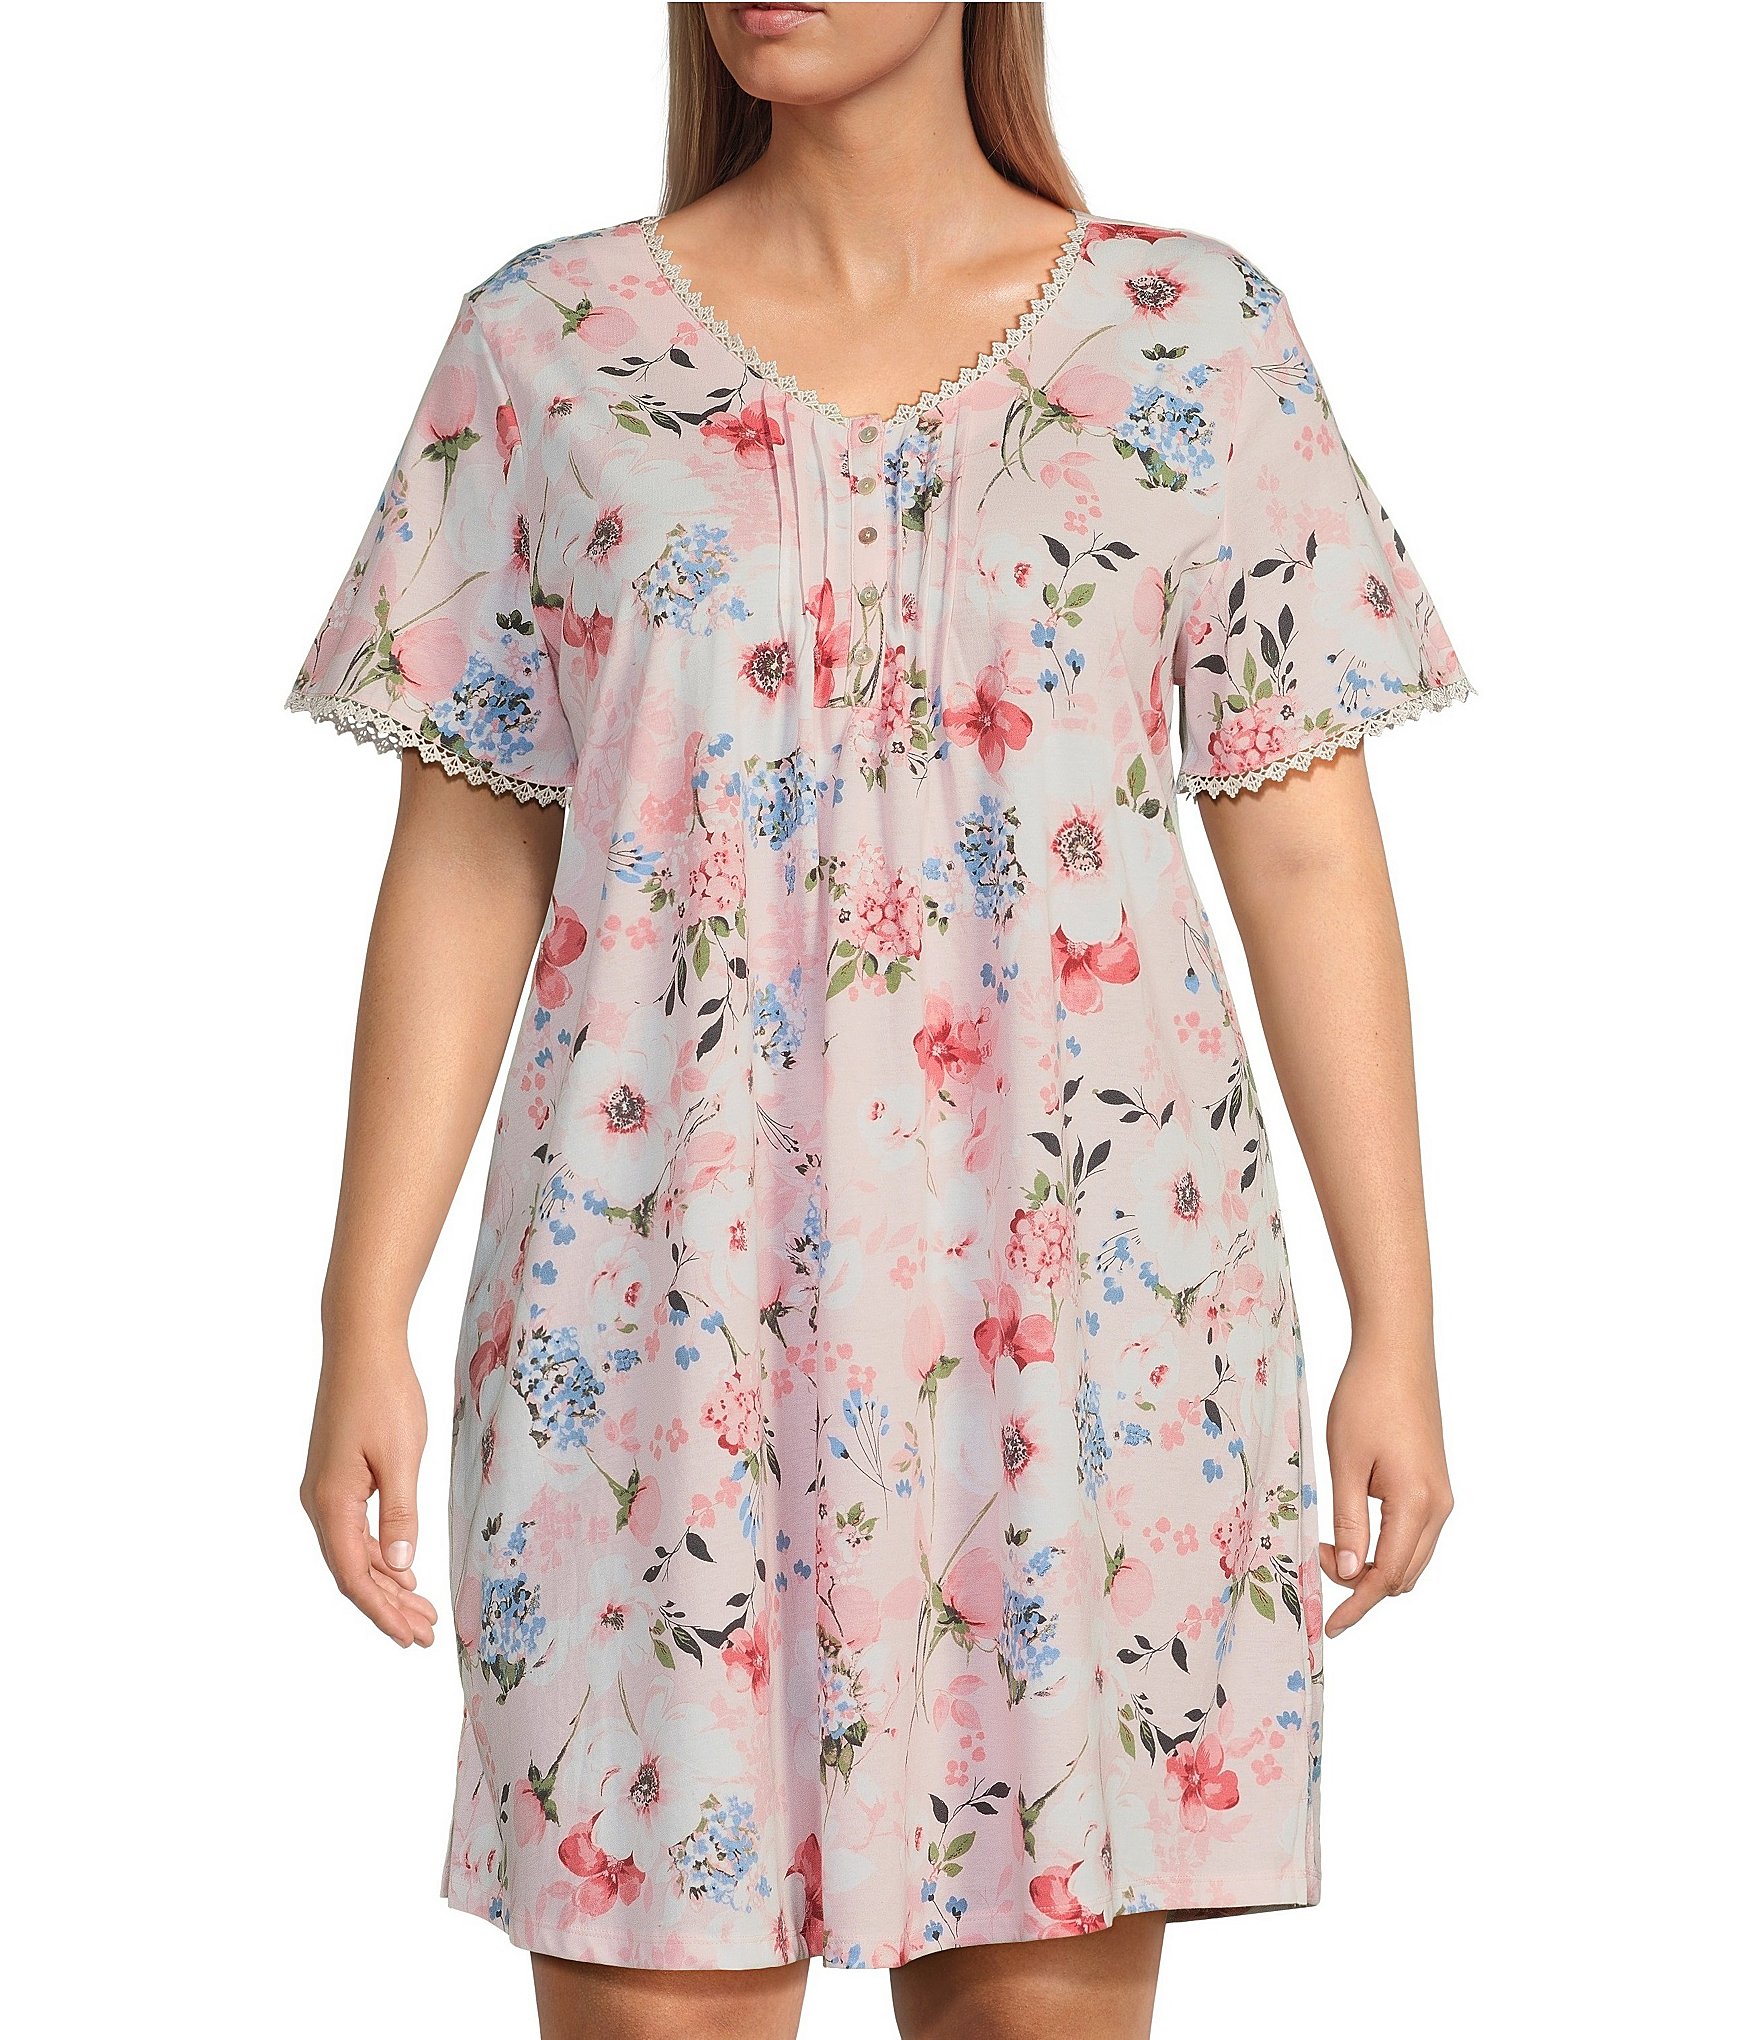 plus size nightgowns: Plus-Size Sleepwear